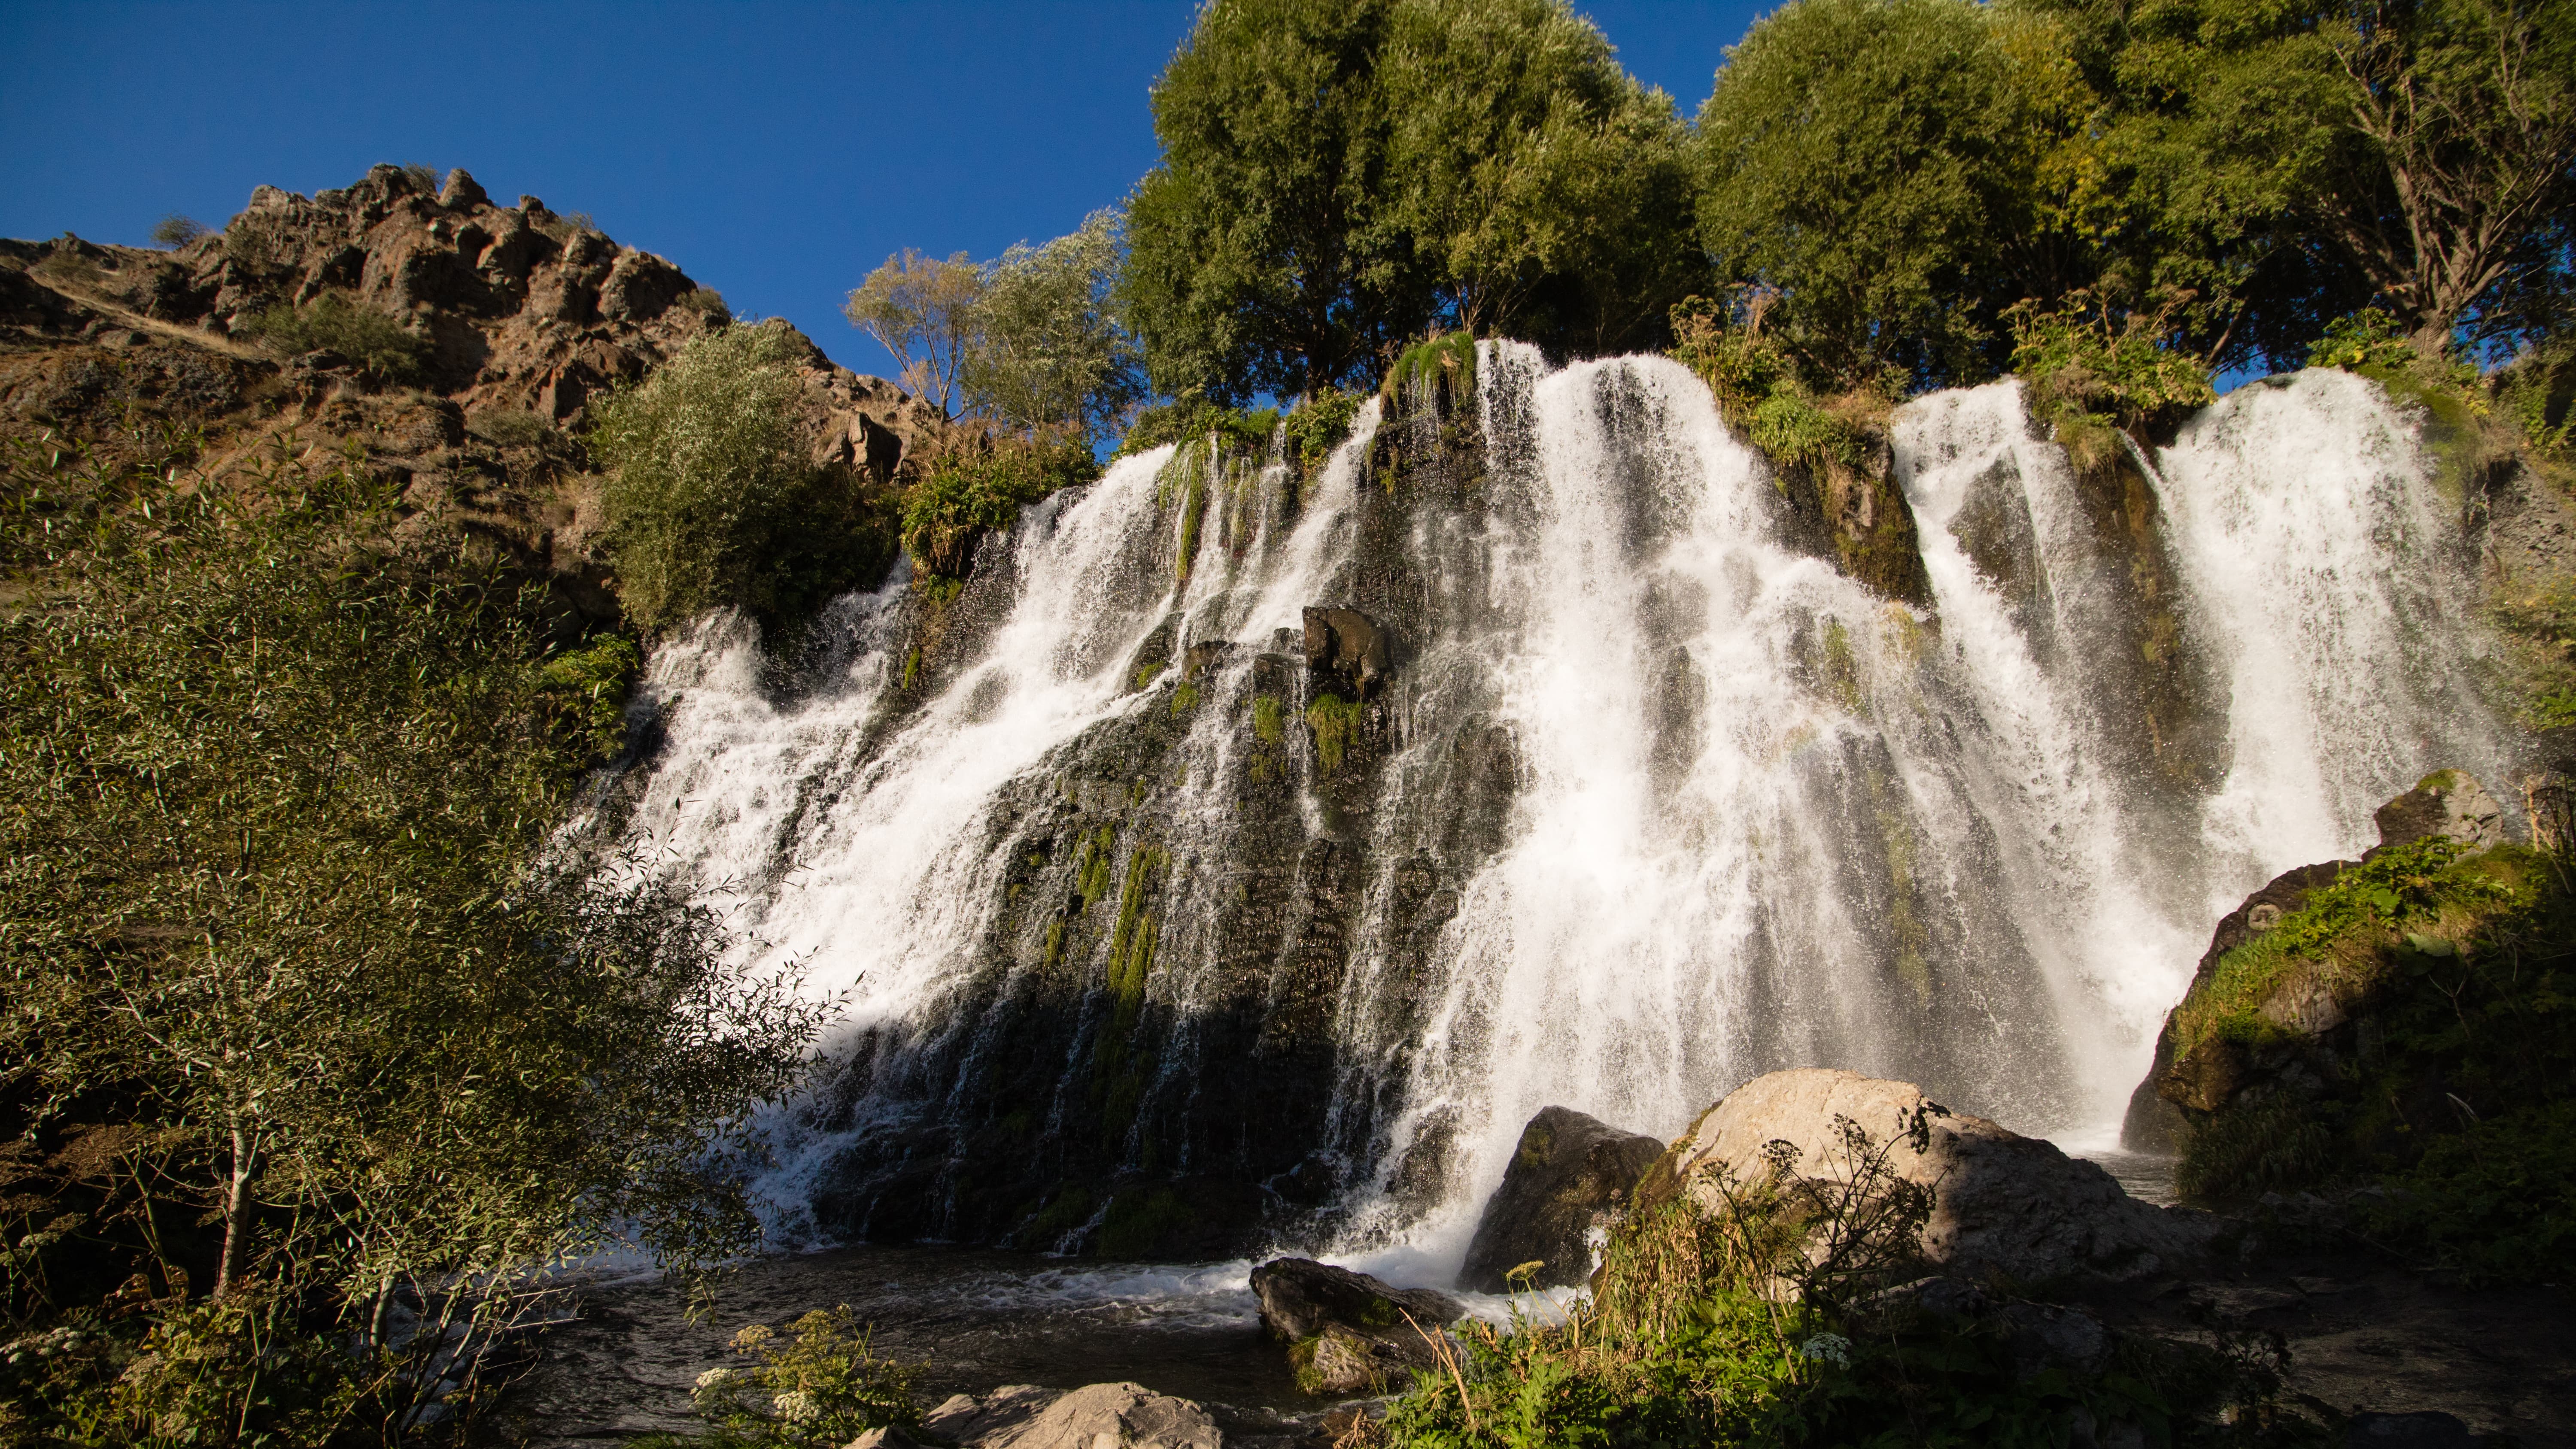 Jermuk & Shaki Waterfall